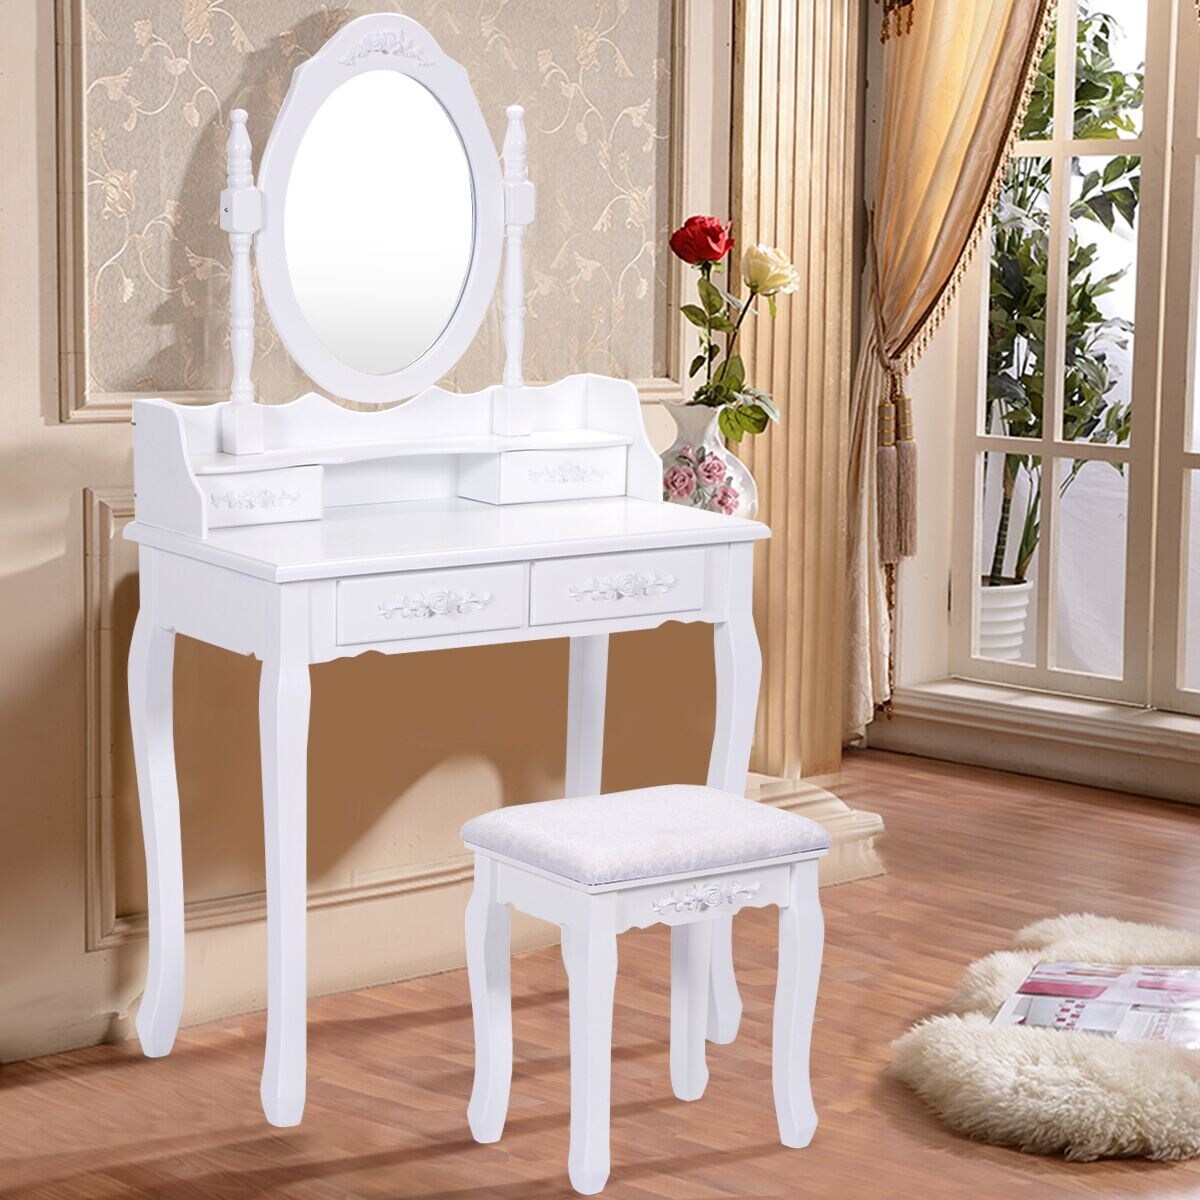 White Vanity Makeup Dressing Table Set w/Stool 5 Drawer&Mirror Jewelry Wood Desk 